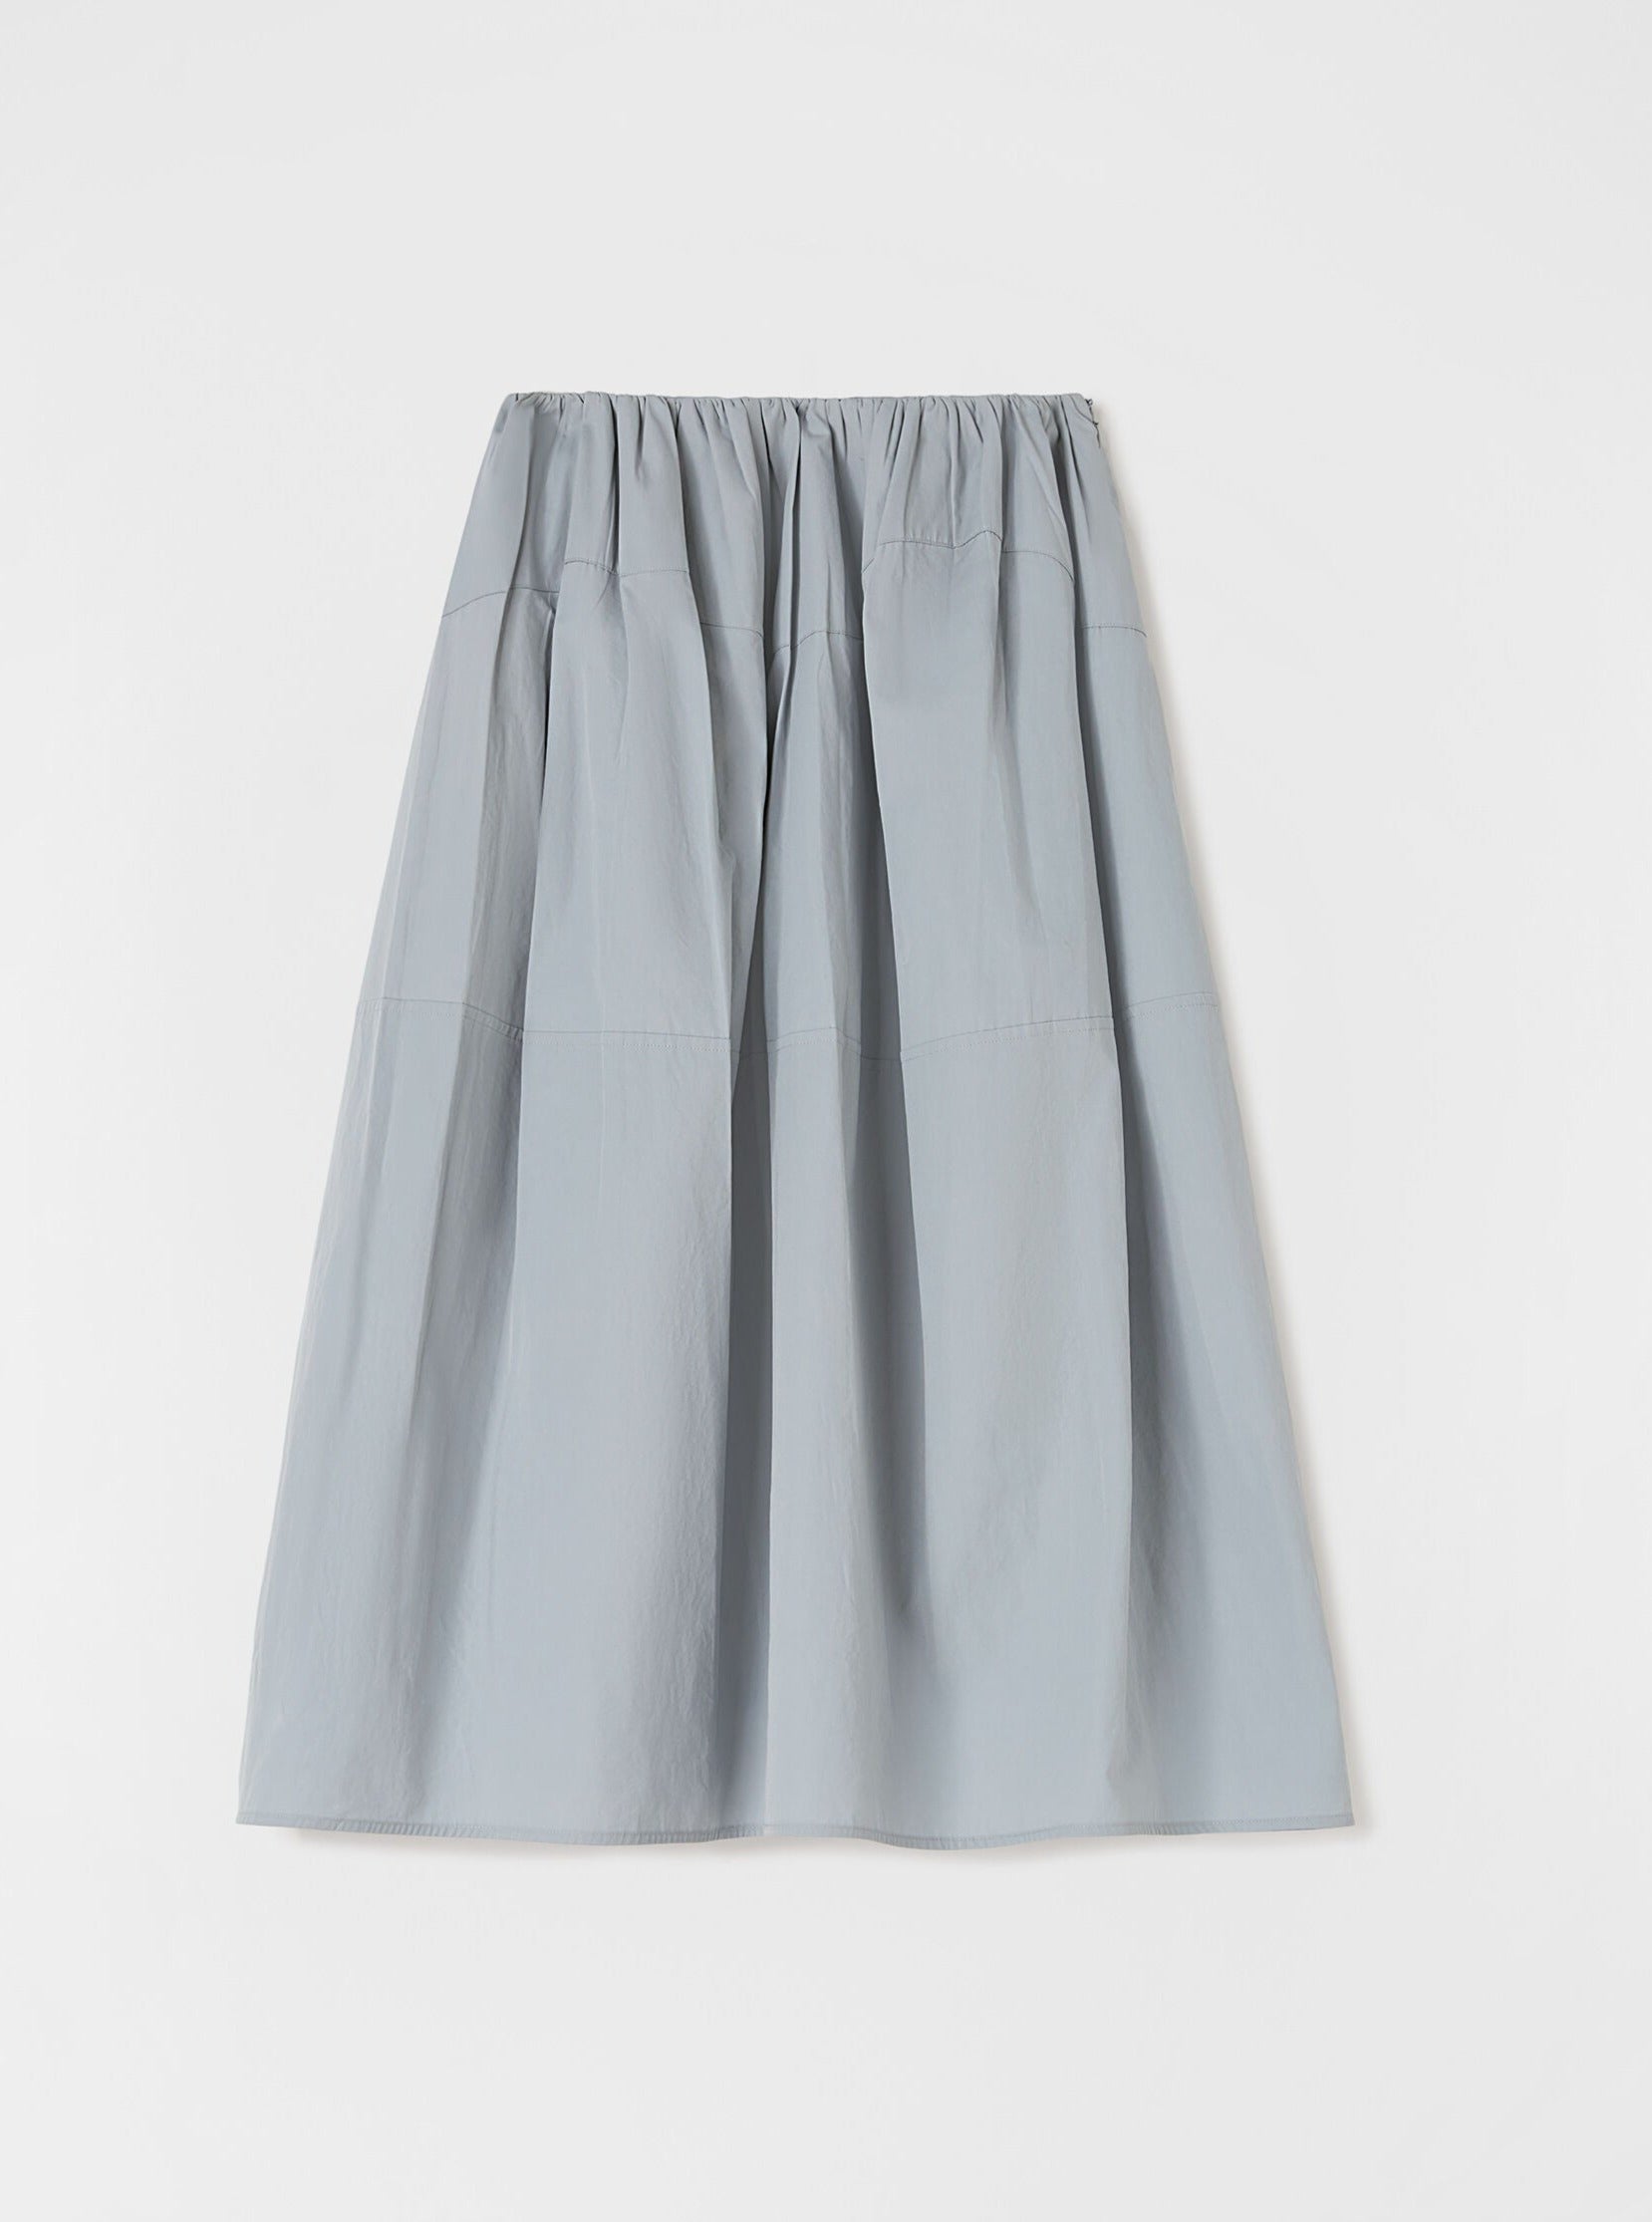 Jil Sander, Pleated Skirt - Pastel Grey, Boboli, Vancouver, Canada